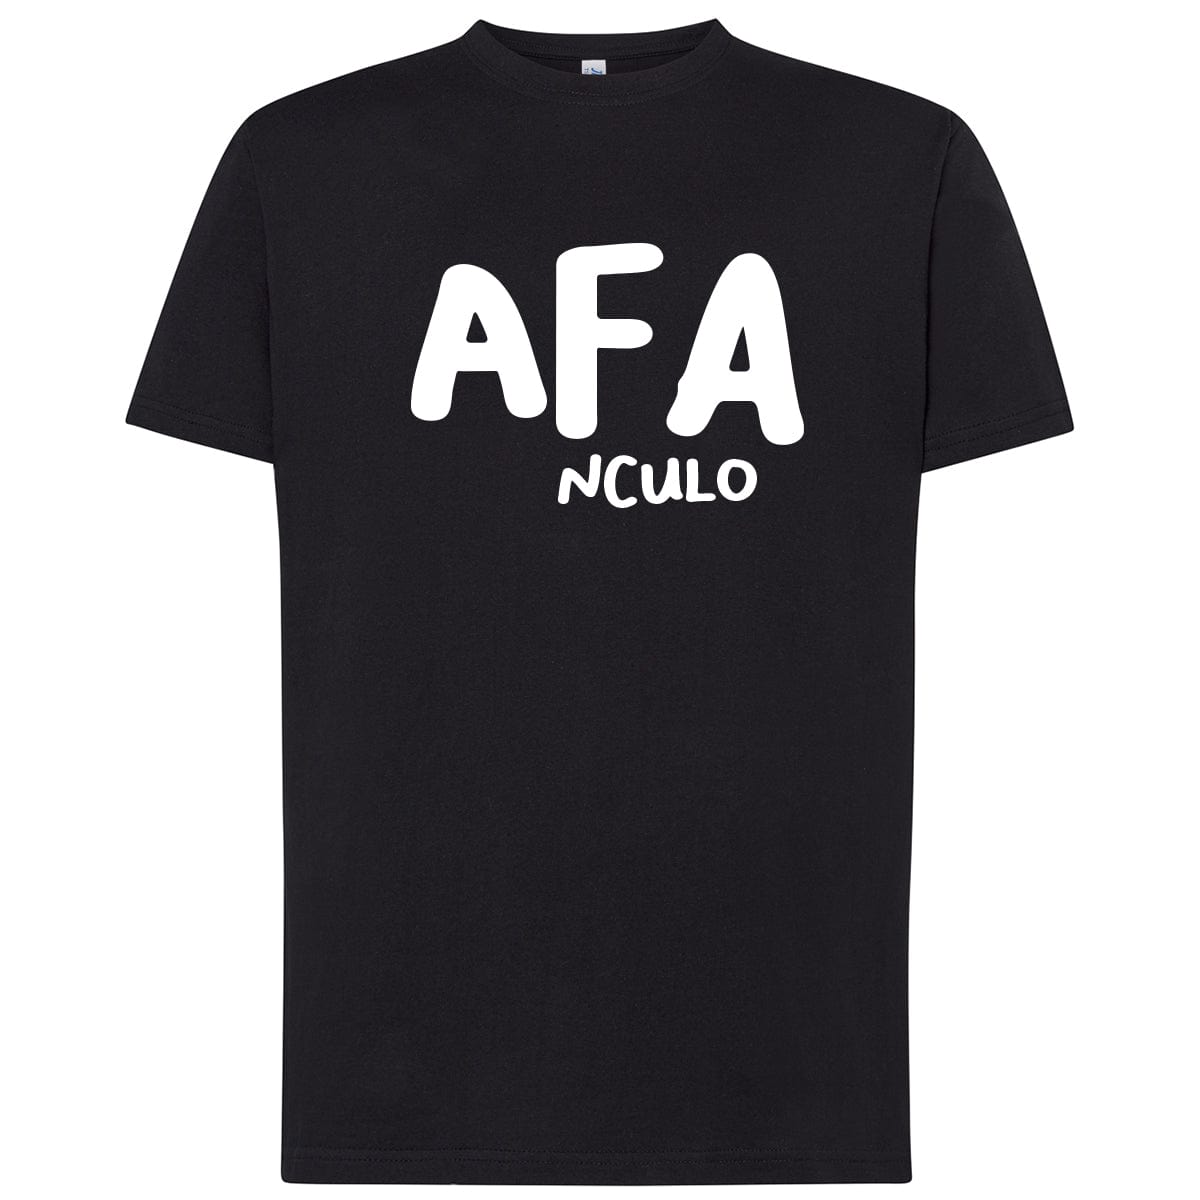 Lol T-Shirt T-shirt S / Nero Afanculo